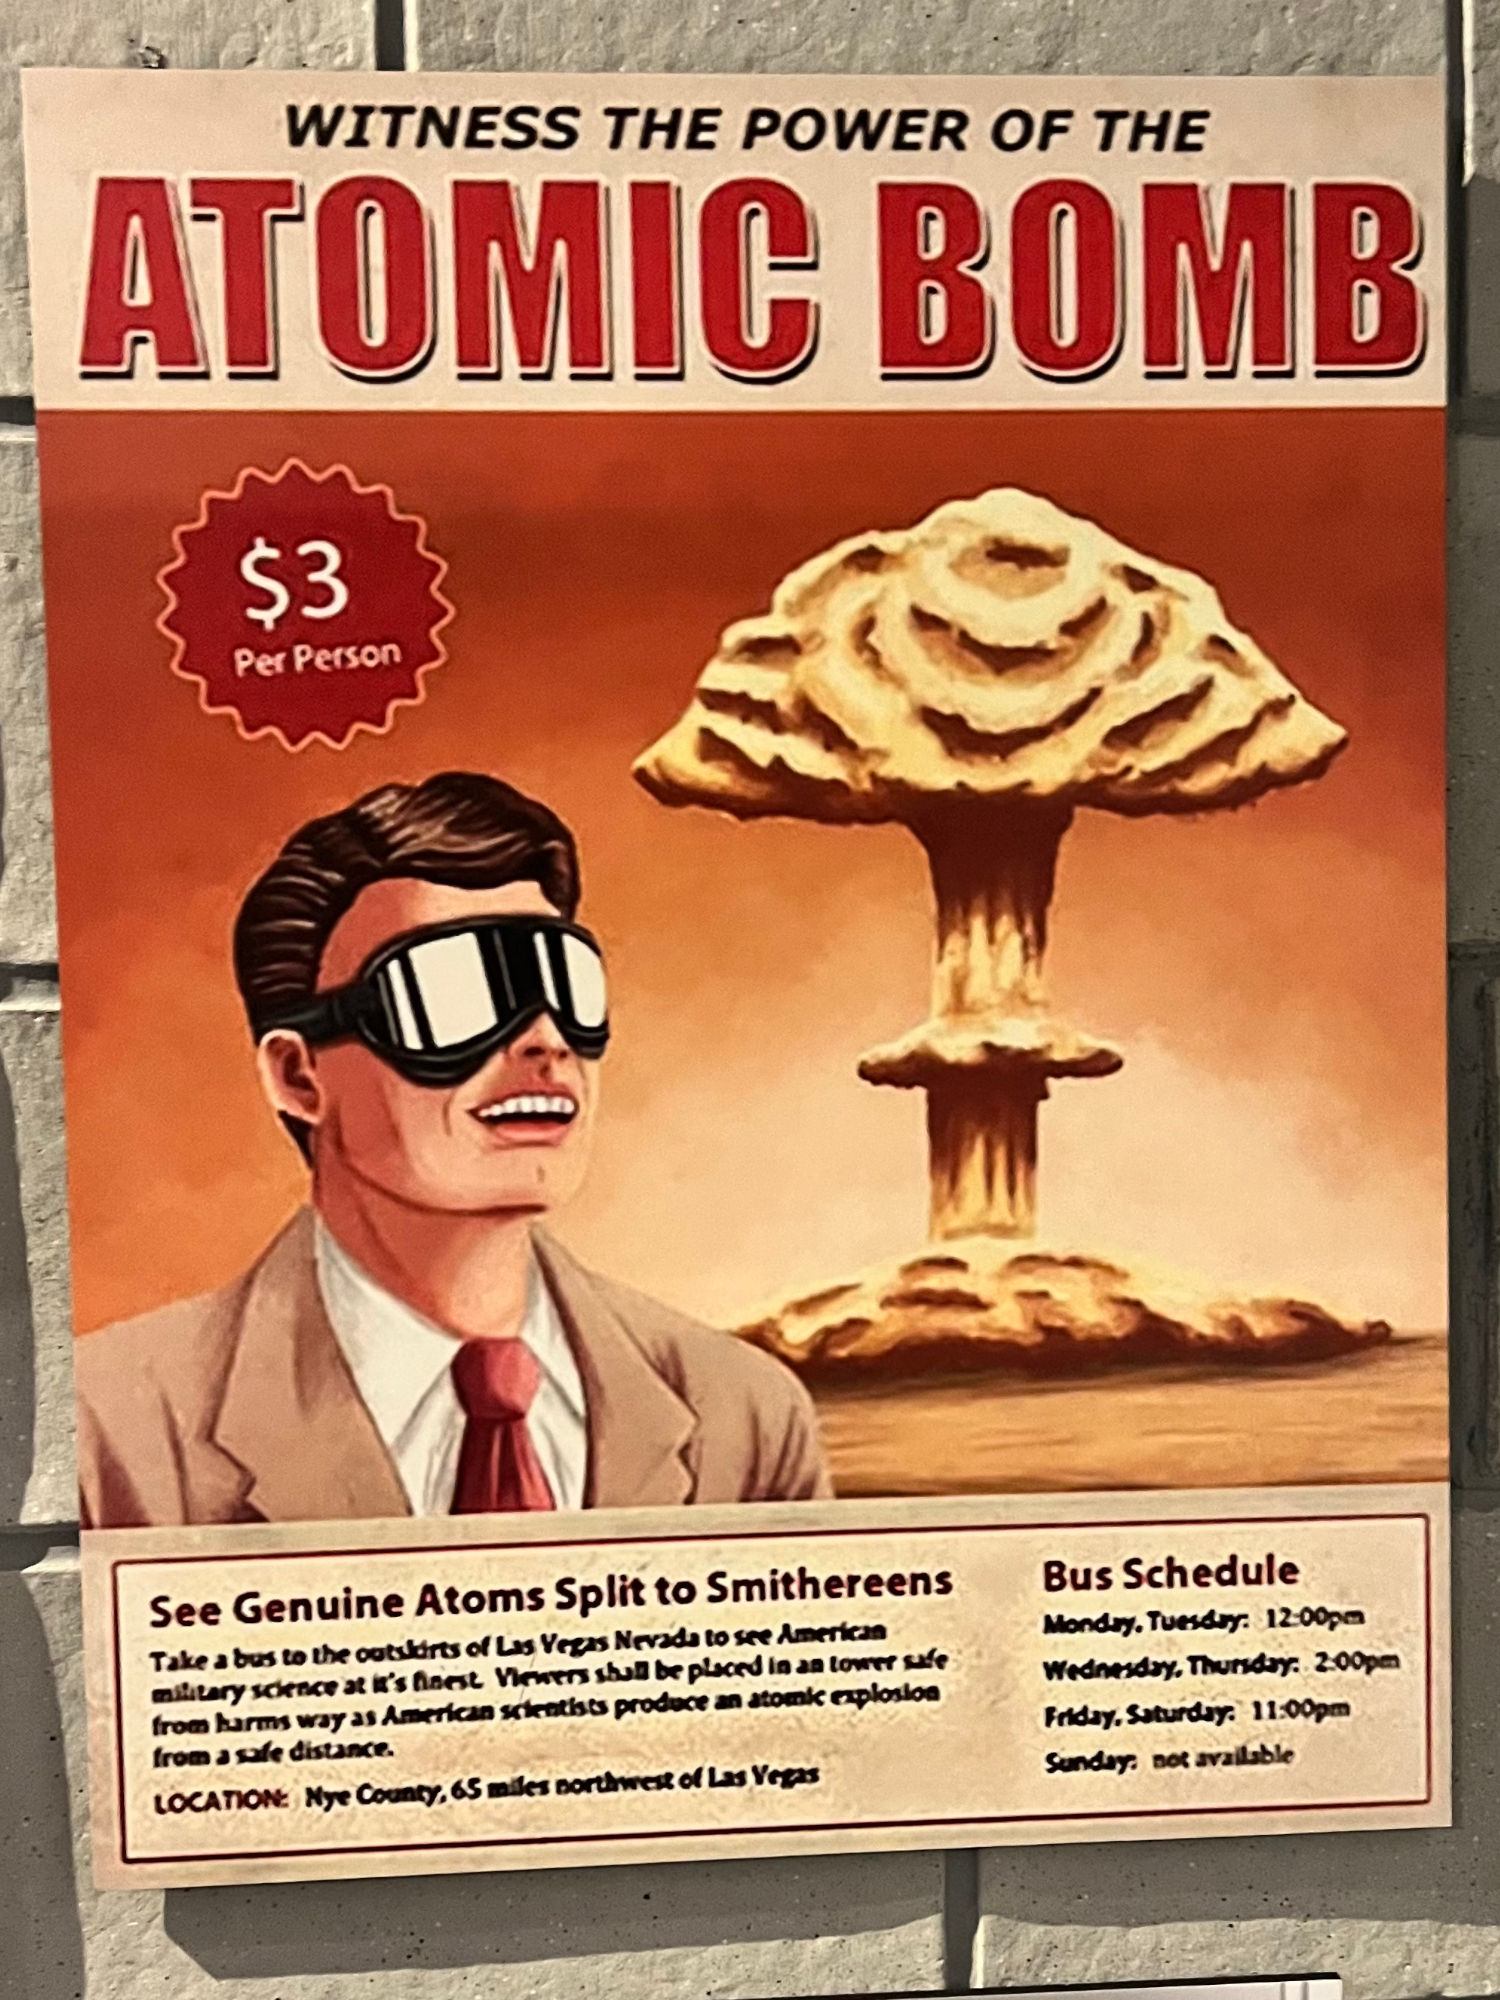 Las Vegas Witness Atomic Bomb Power